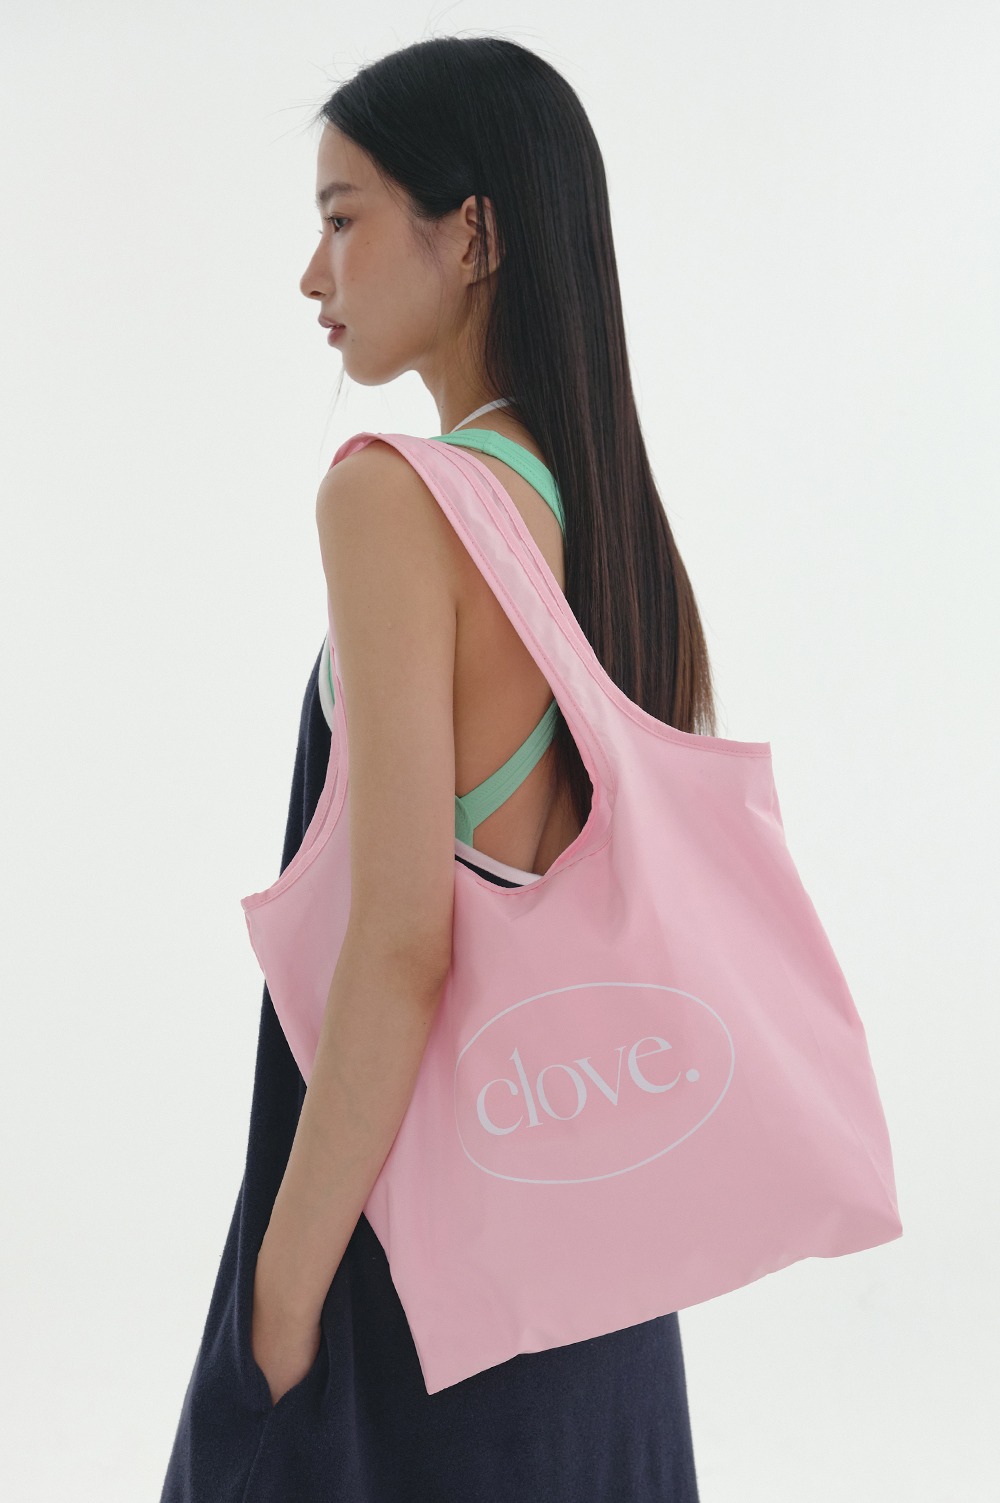 clove - [5/24(금) 예약배송][24SS Clove] Packable Tote Bag (Pink)